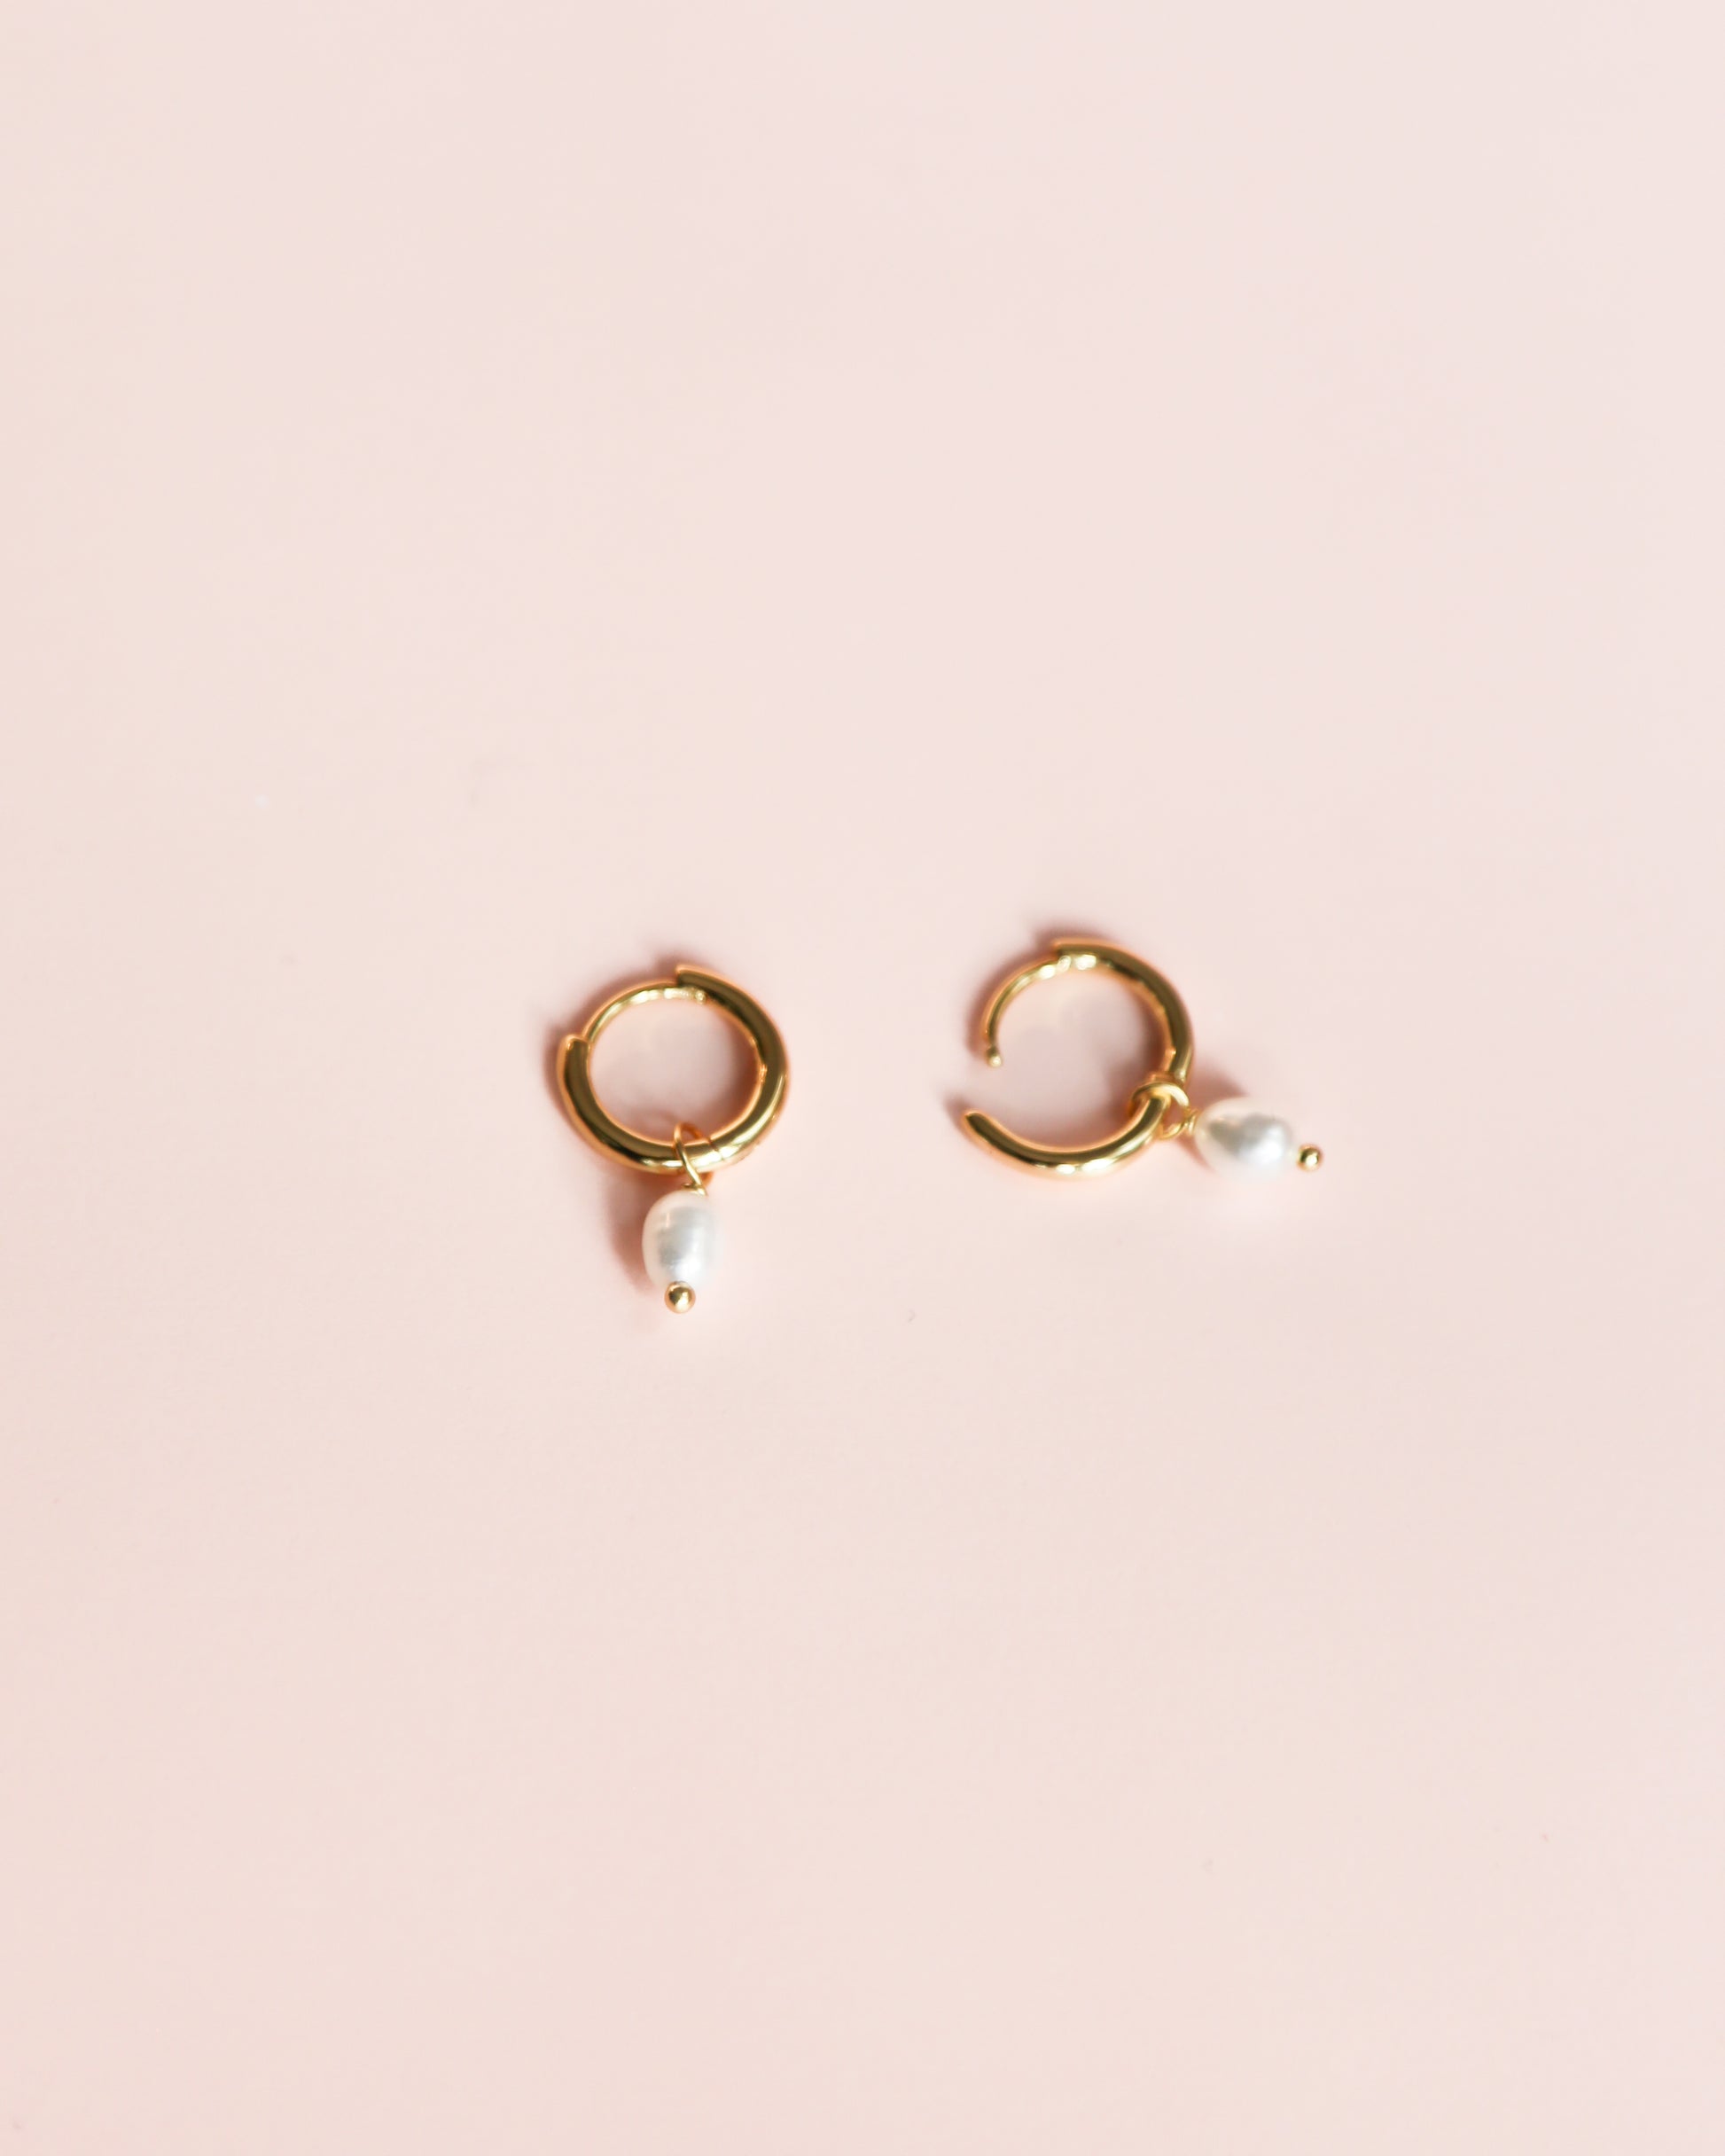 Gold hoops earrings with freshwater pearls Ollijewelry